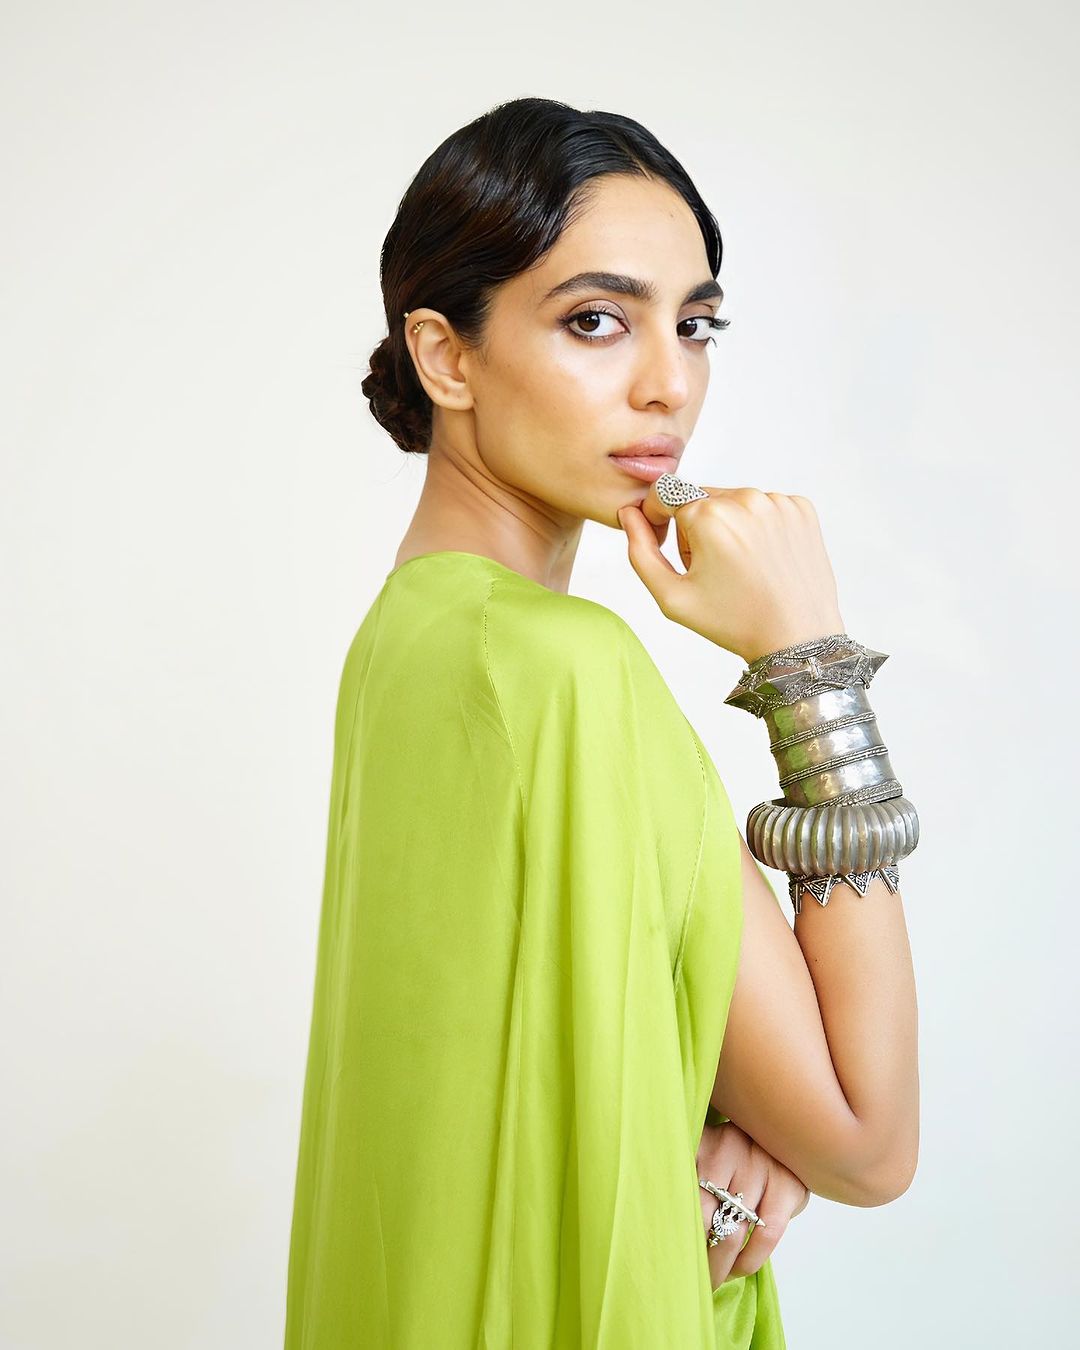 sobhita-dhulipala-gorgeous-looks-in-neon-green-saree